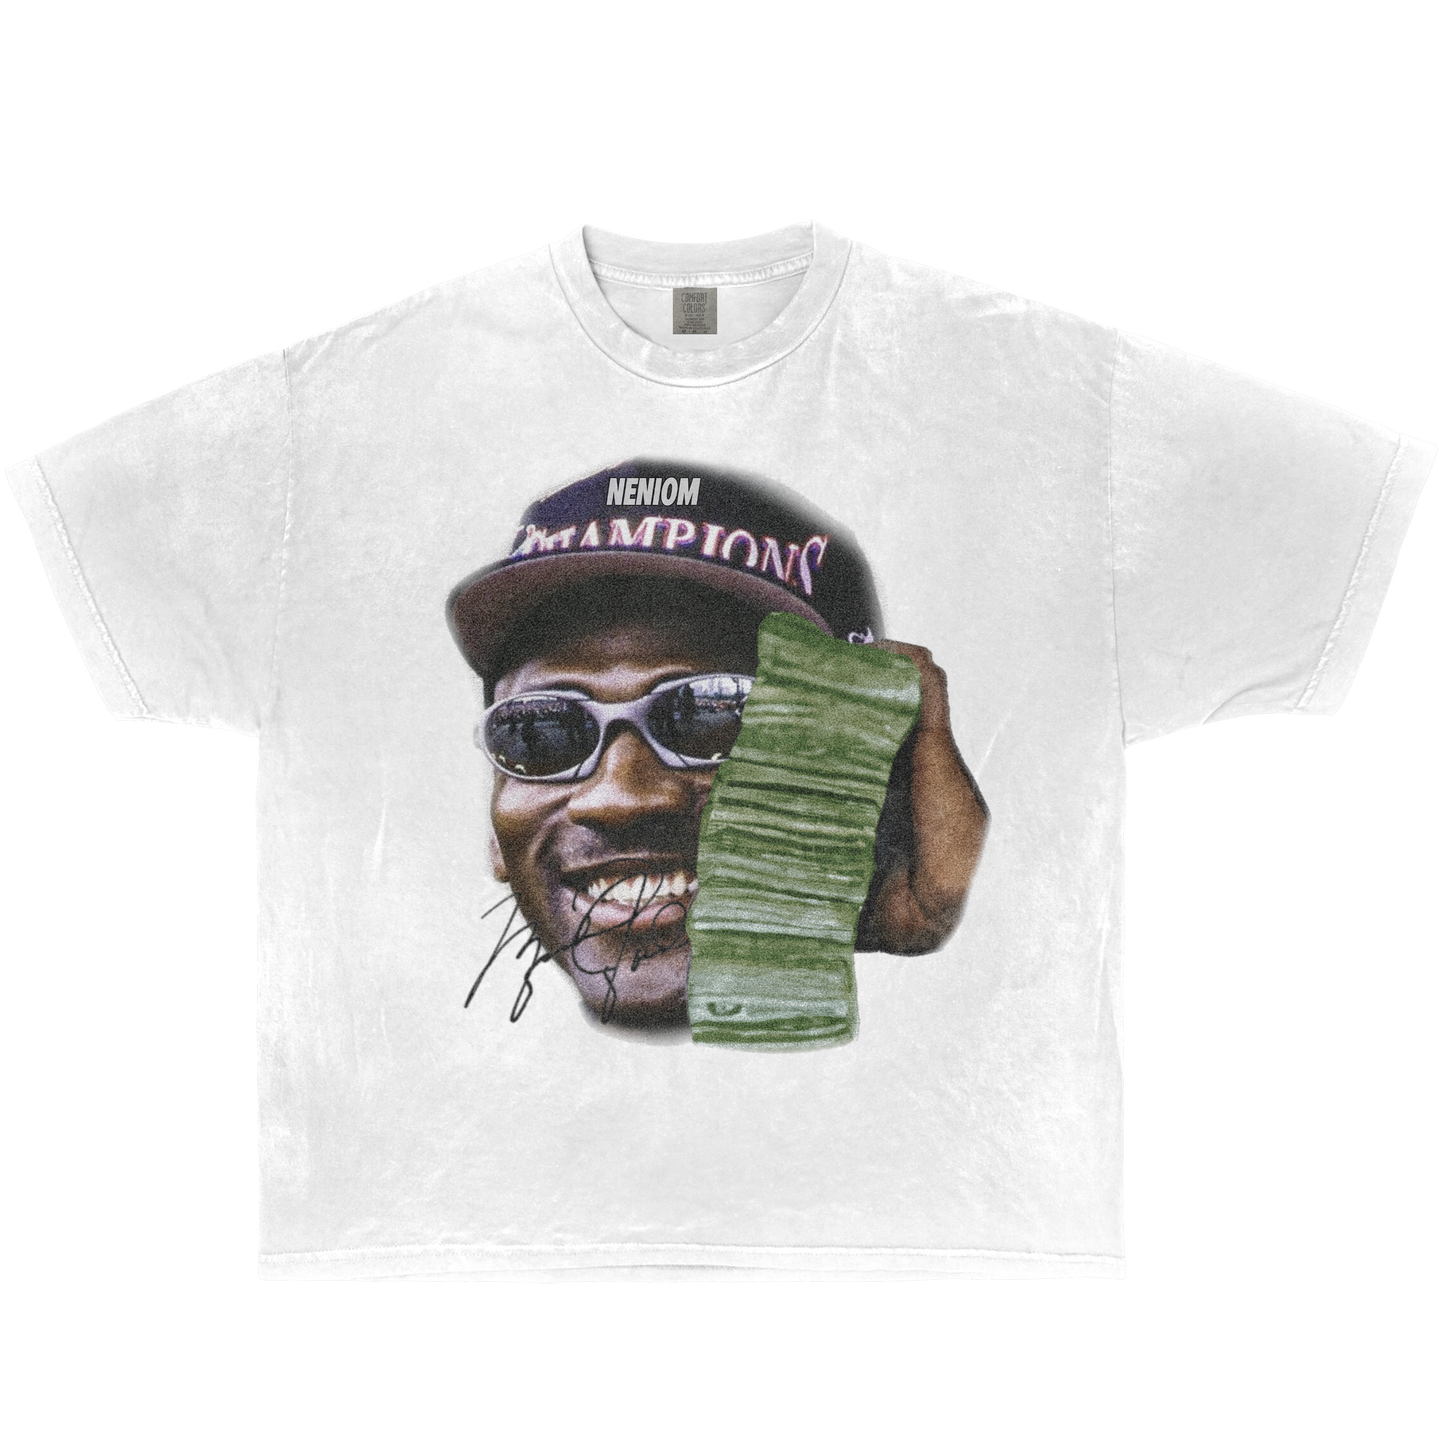 Michael Jordan Money Talk Garment Boxy Camiseta Ropa de calle